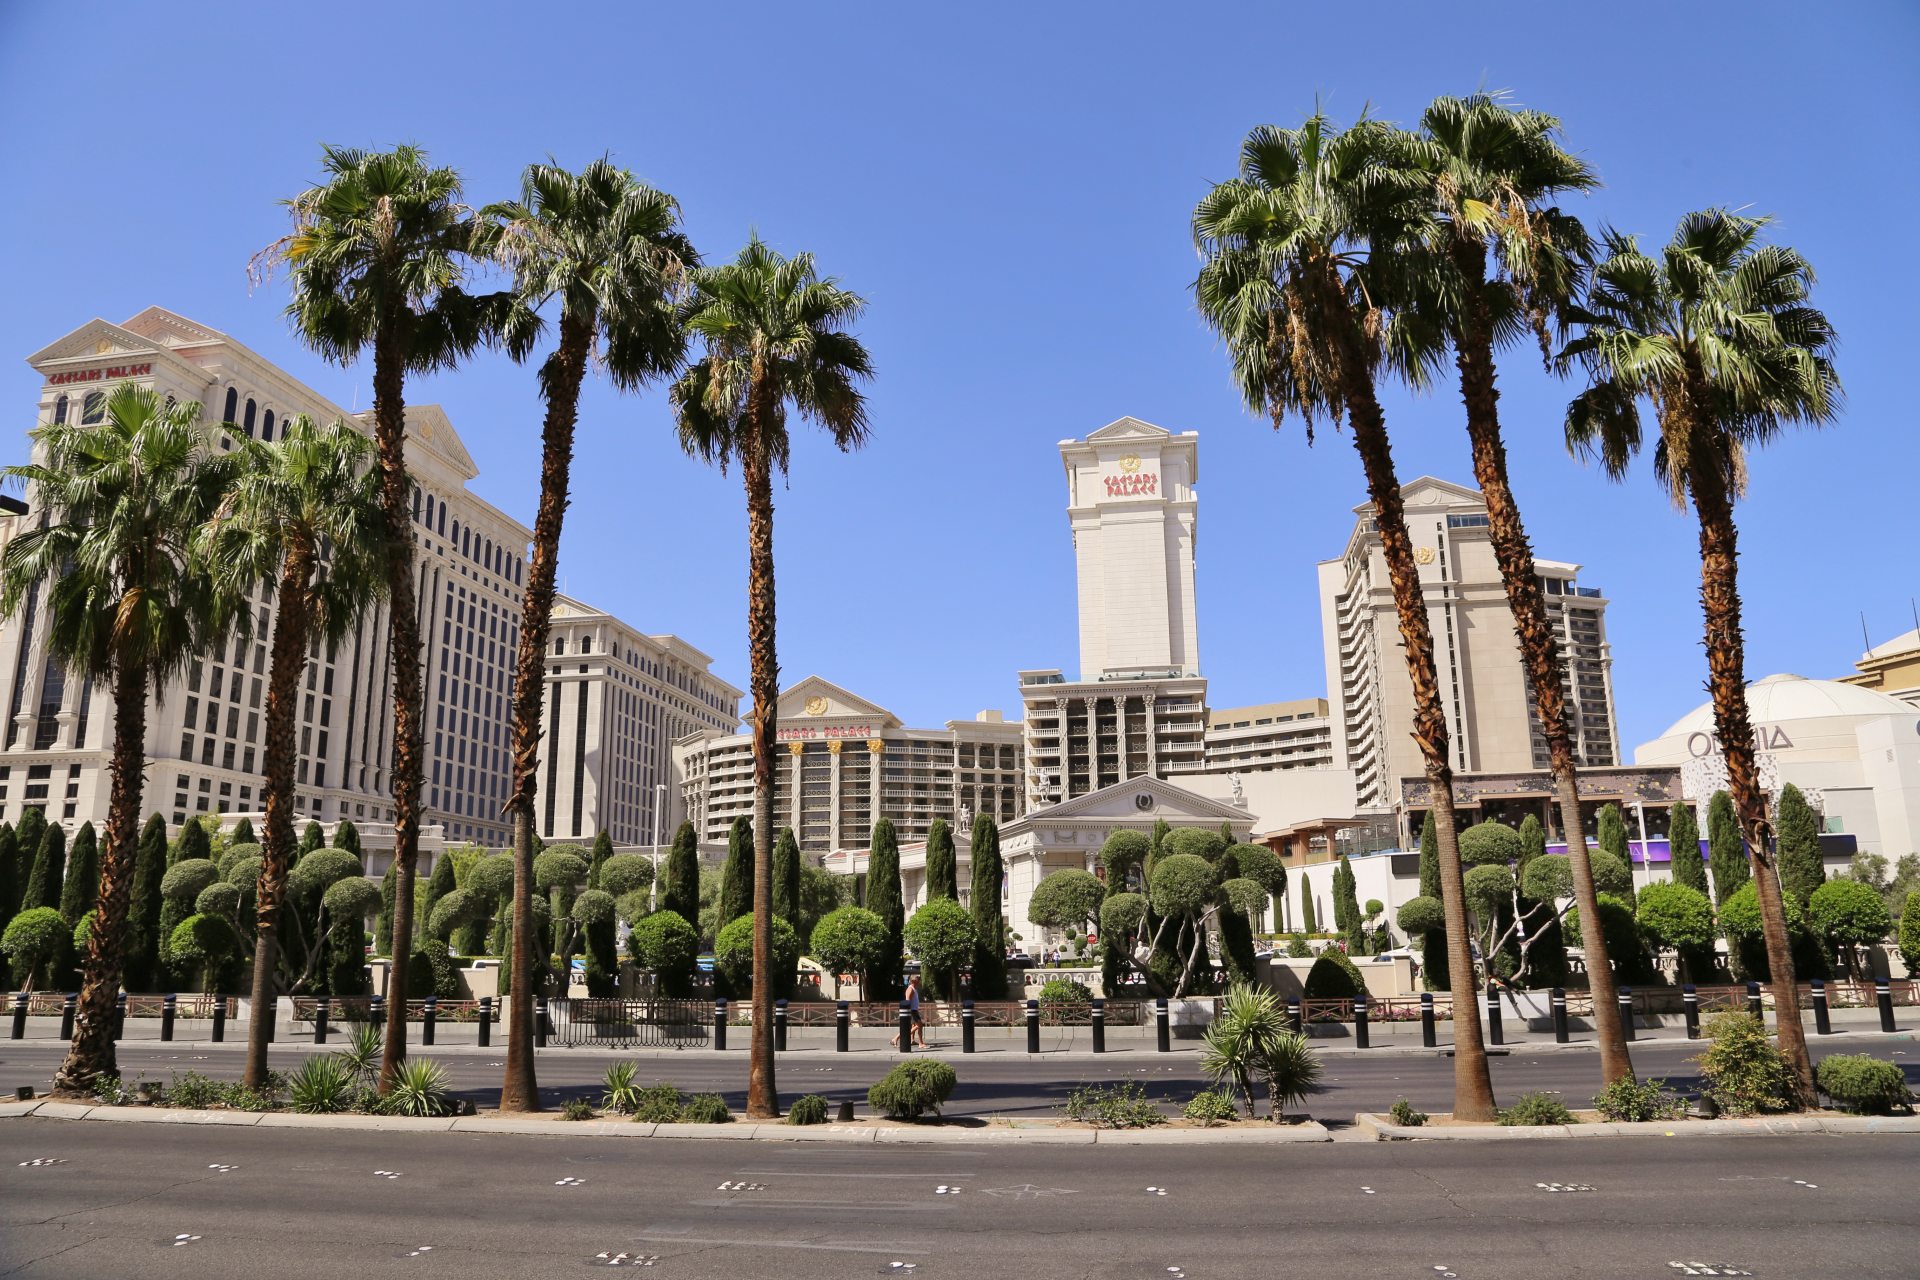 Cäsar hätte seine Freude an diesem Palast! - Bäume, Caesars Palace Las Vegas Hotel & Casino, Gebäude, Himmel, Las Vegas, Nevada, Palmen, Strasse - (Bracken, Las Vegas, Nevada, Vereinigte Staaten)